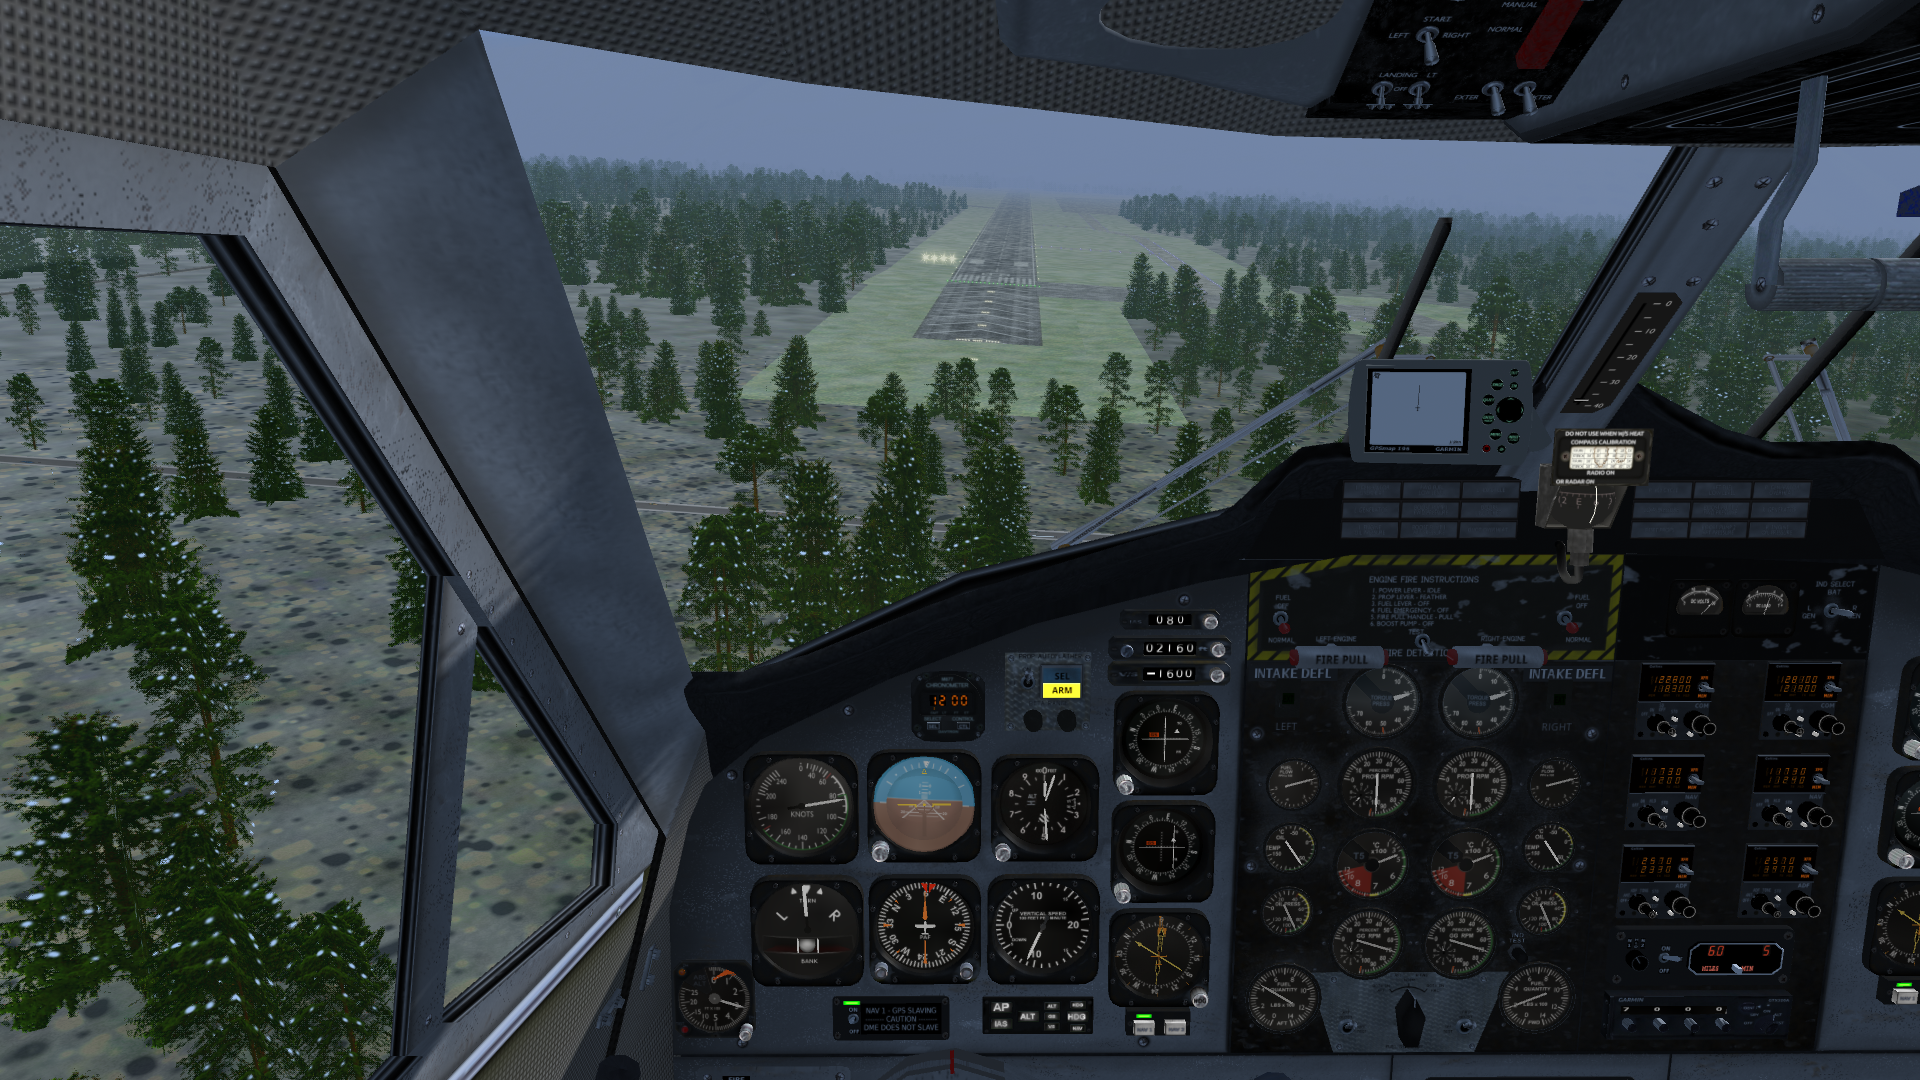 Steep final approach at Goose Bay (CYYR).